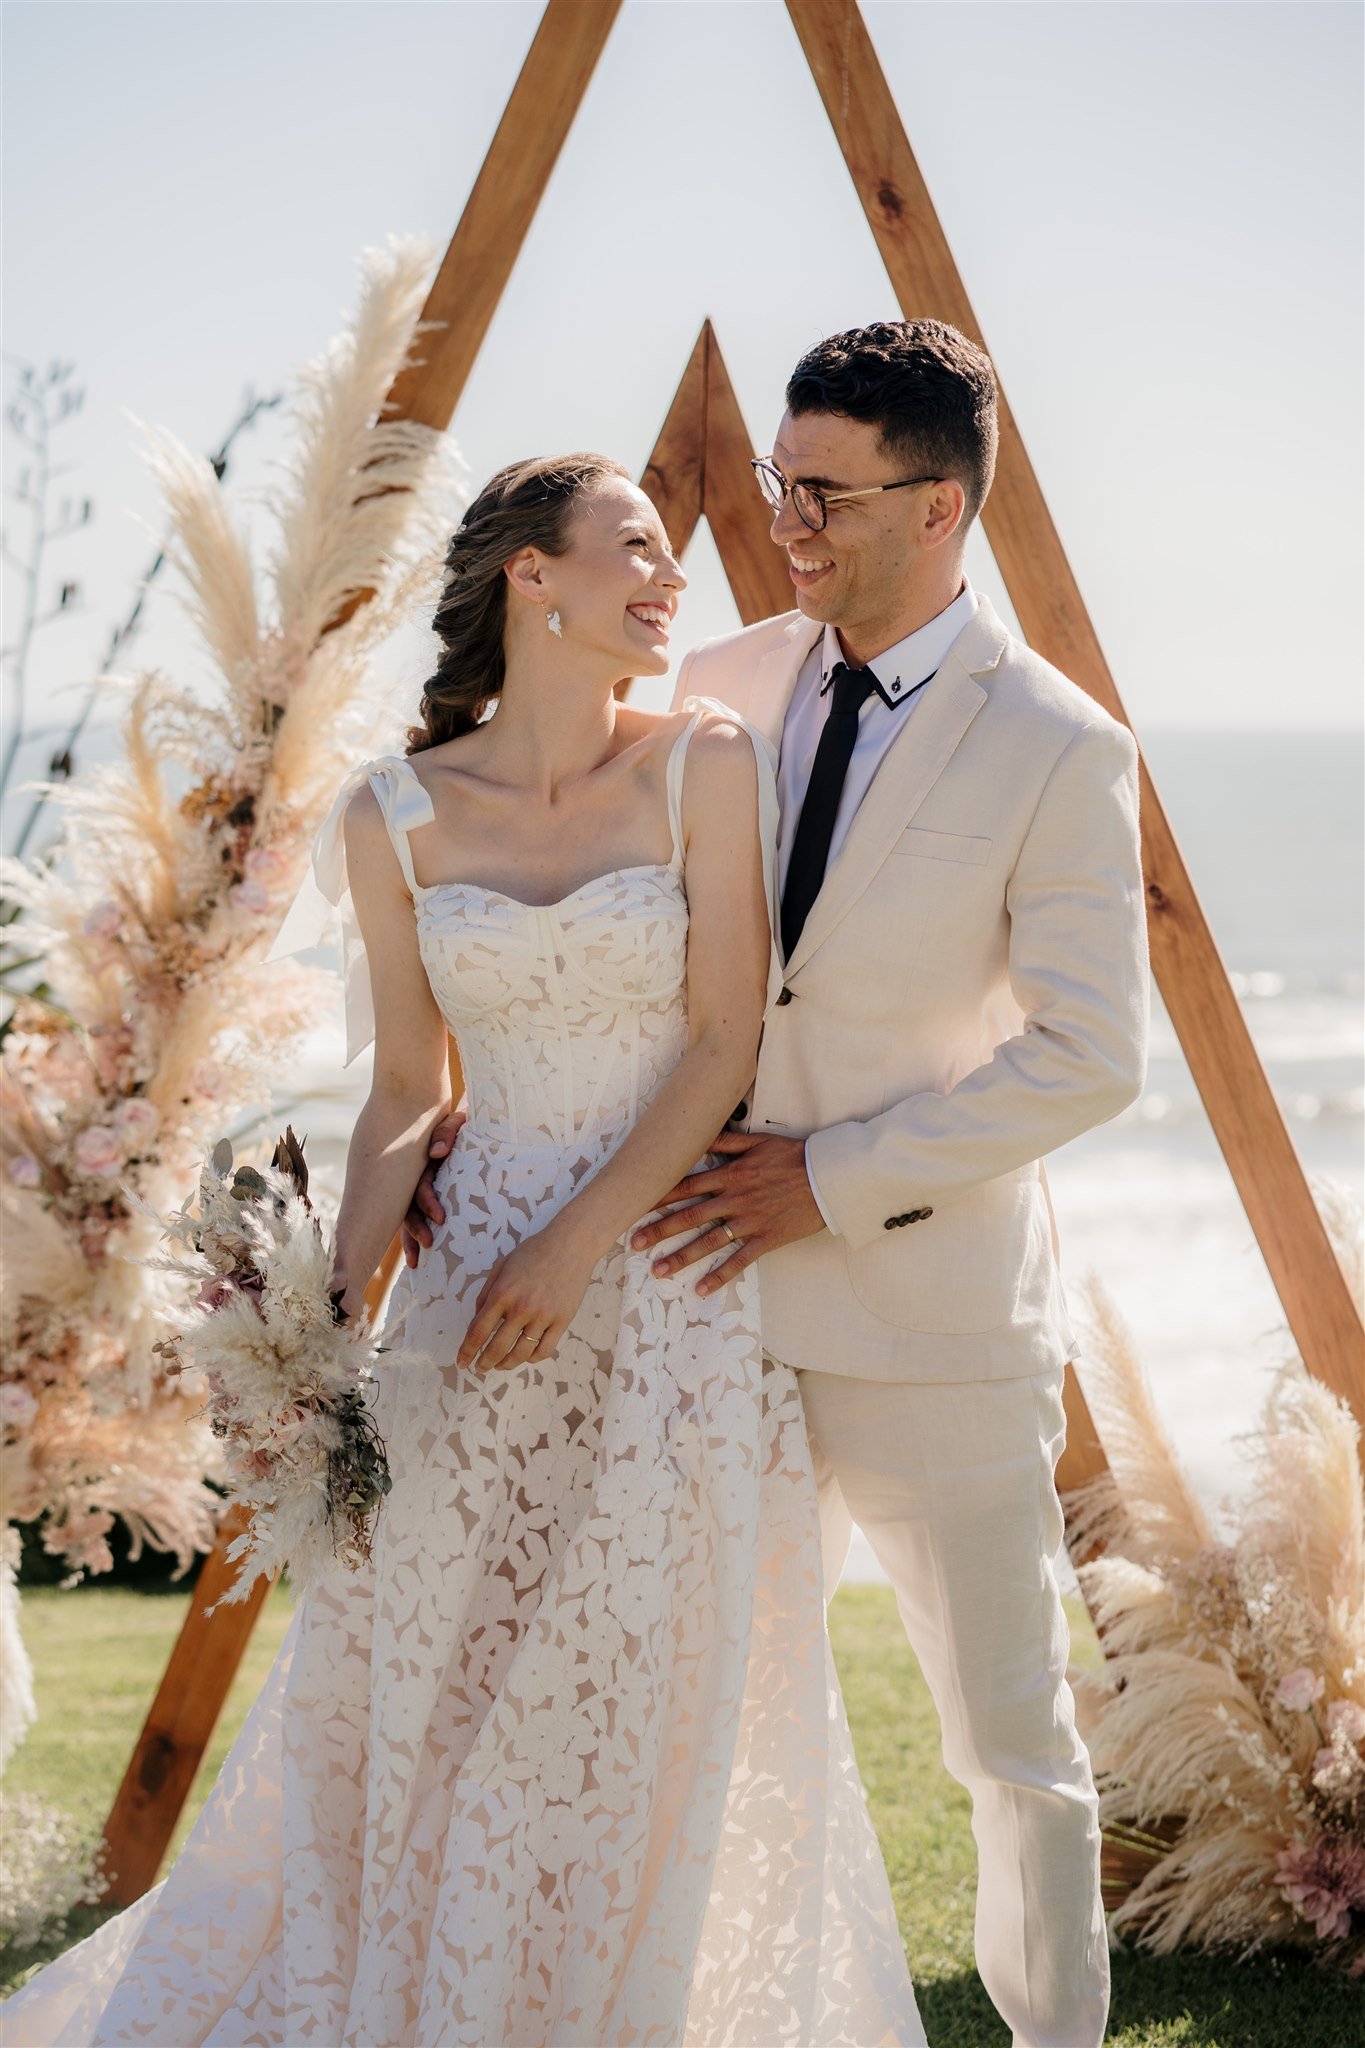 castaways-NZ-new-zealand-auckland-wedding-photographer-photography-videography-film-dear-white-productions-best-venue-waiuku-engagement-elopement-style-beach-intimate-miss-chloe-gown-dress (6).jpg